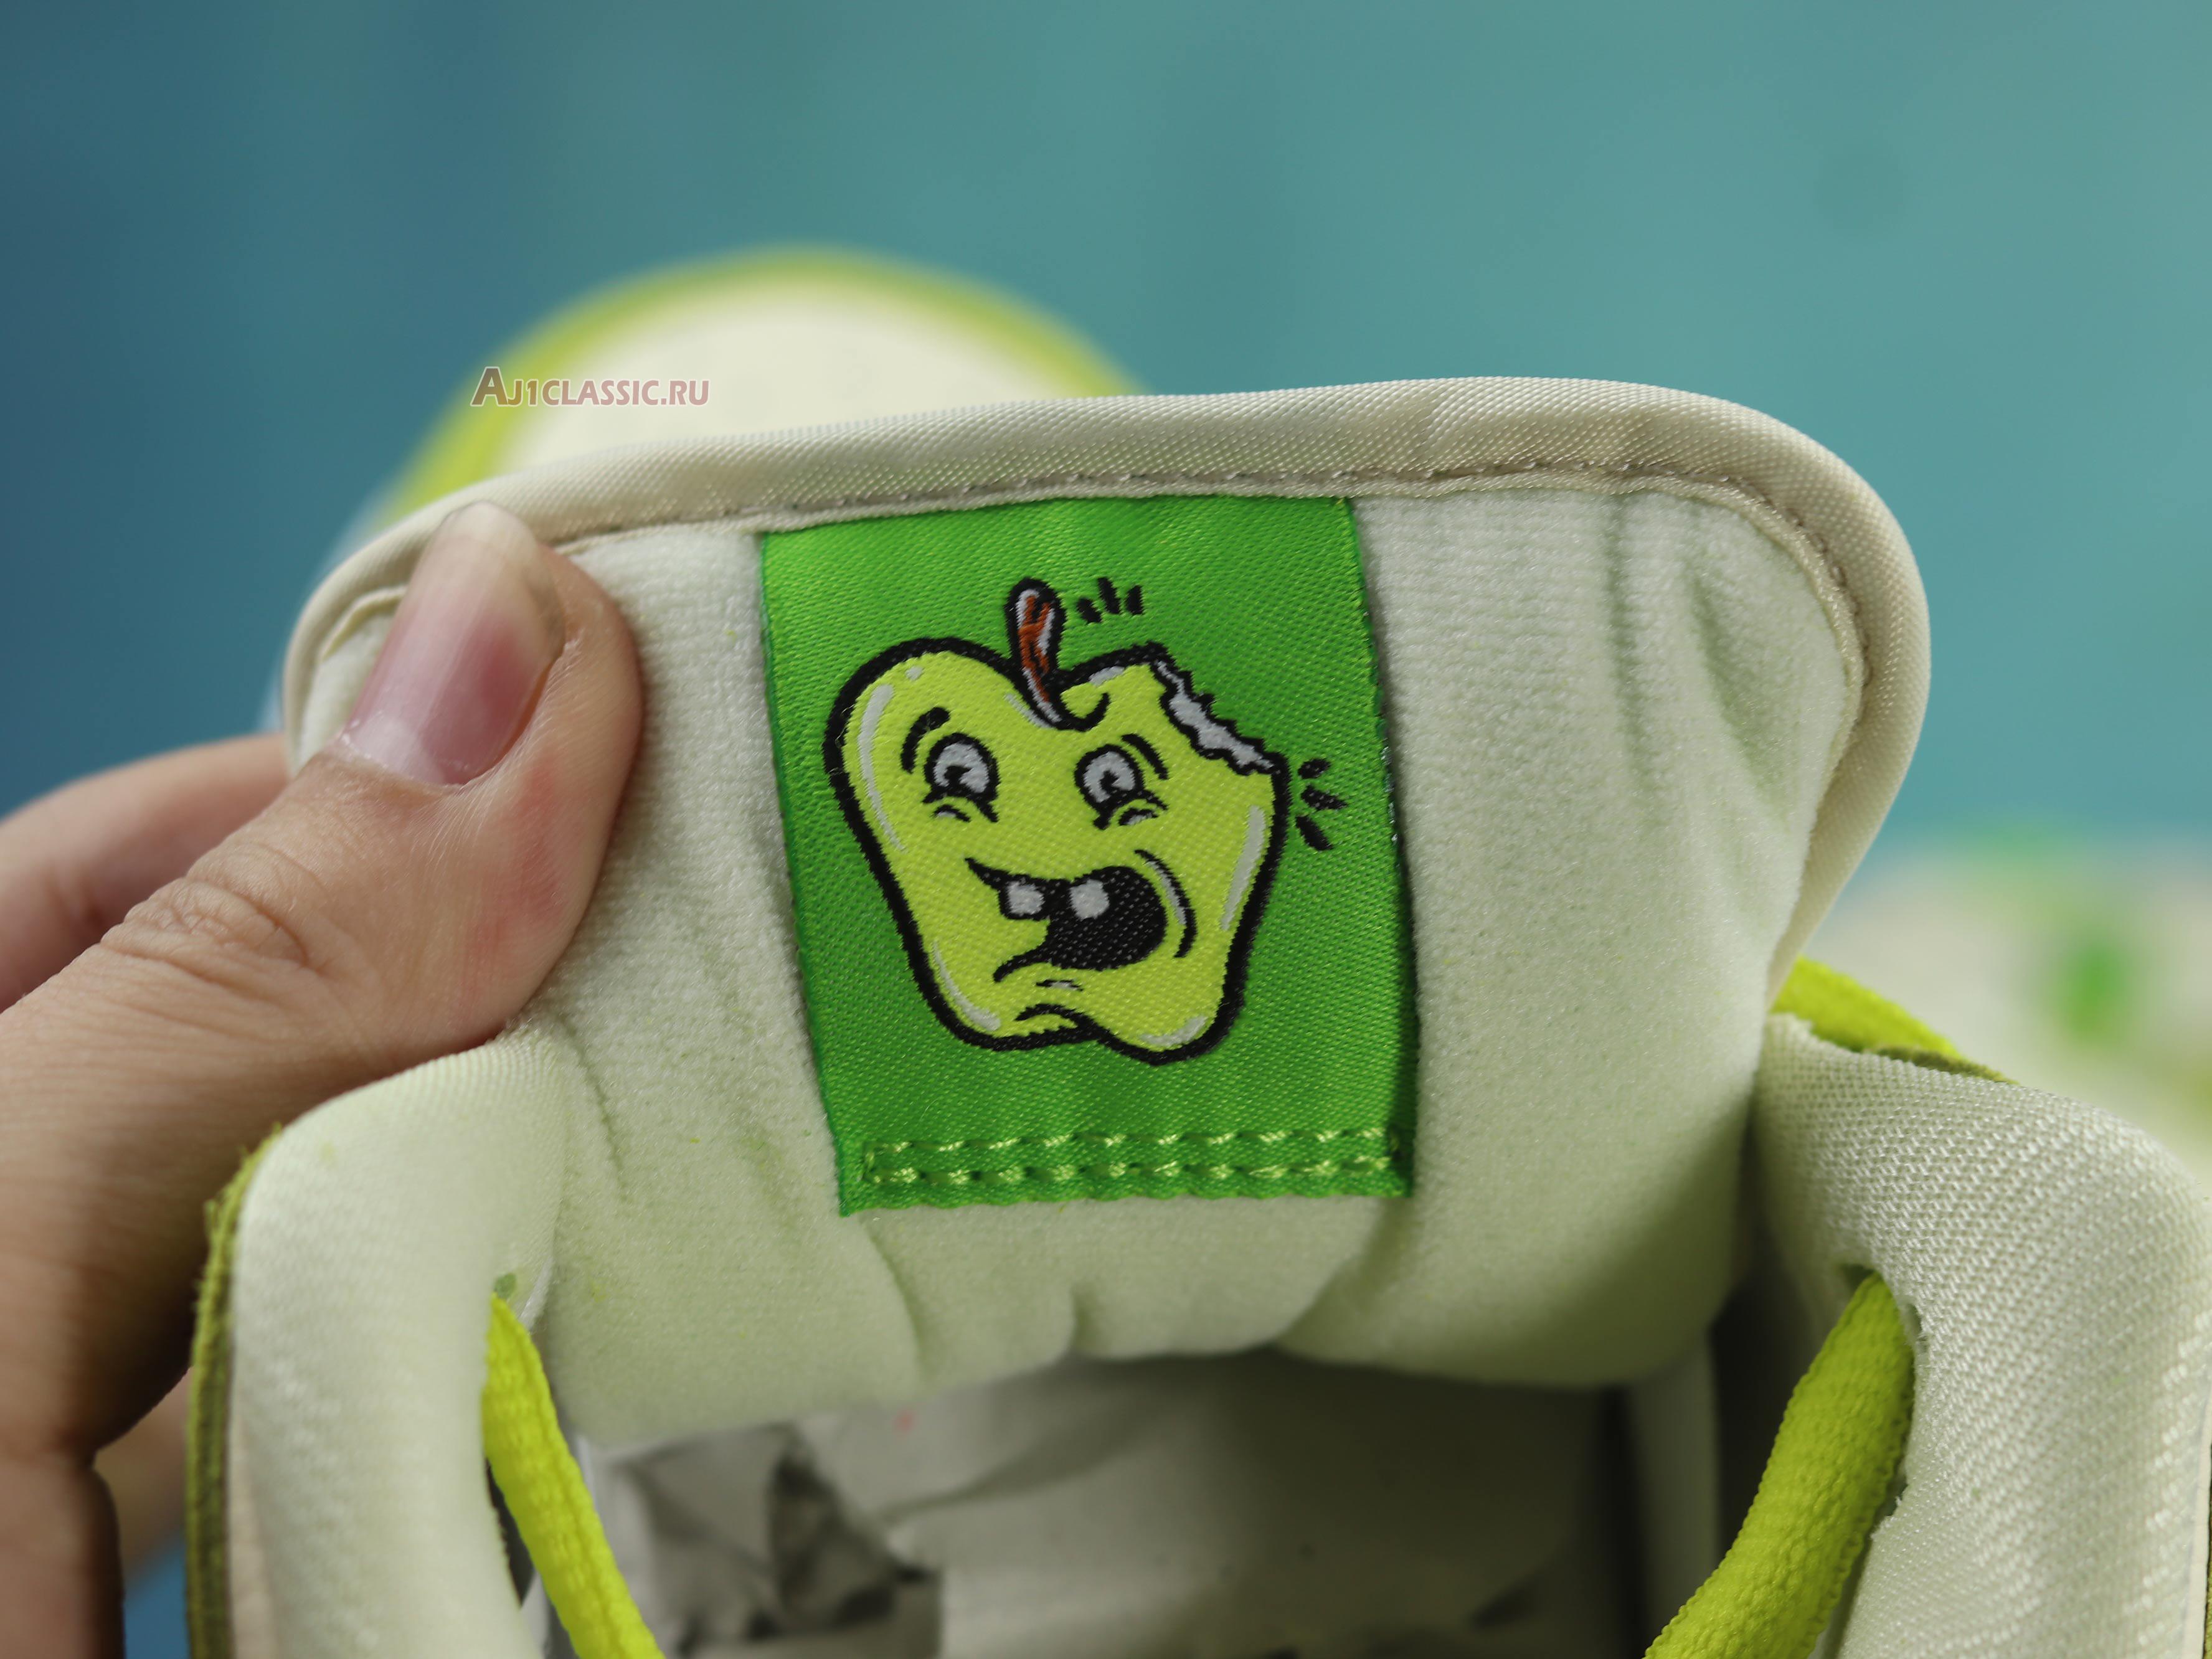 Nike SB Dunk Low "Green Apple" DM0807-300